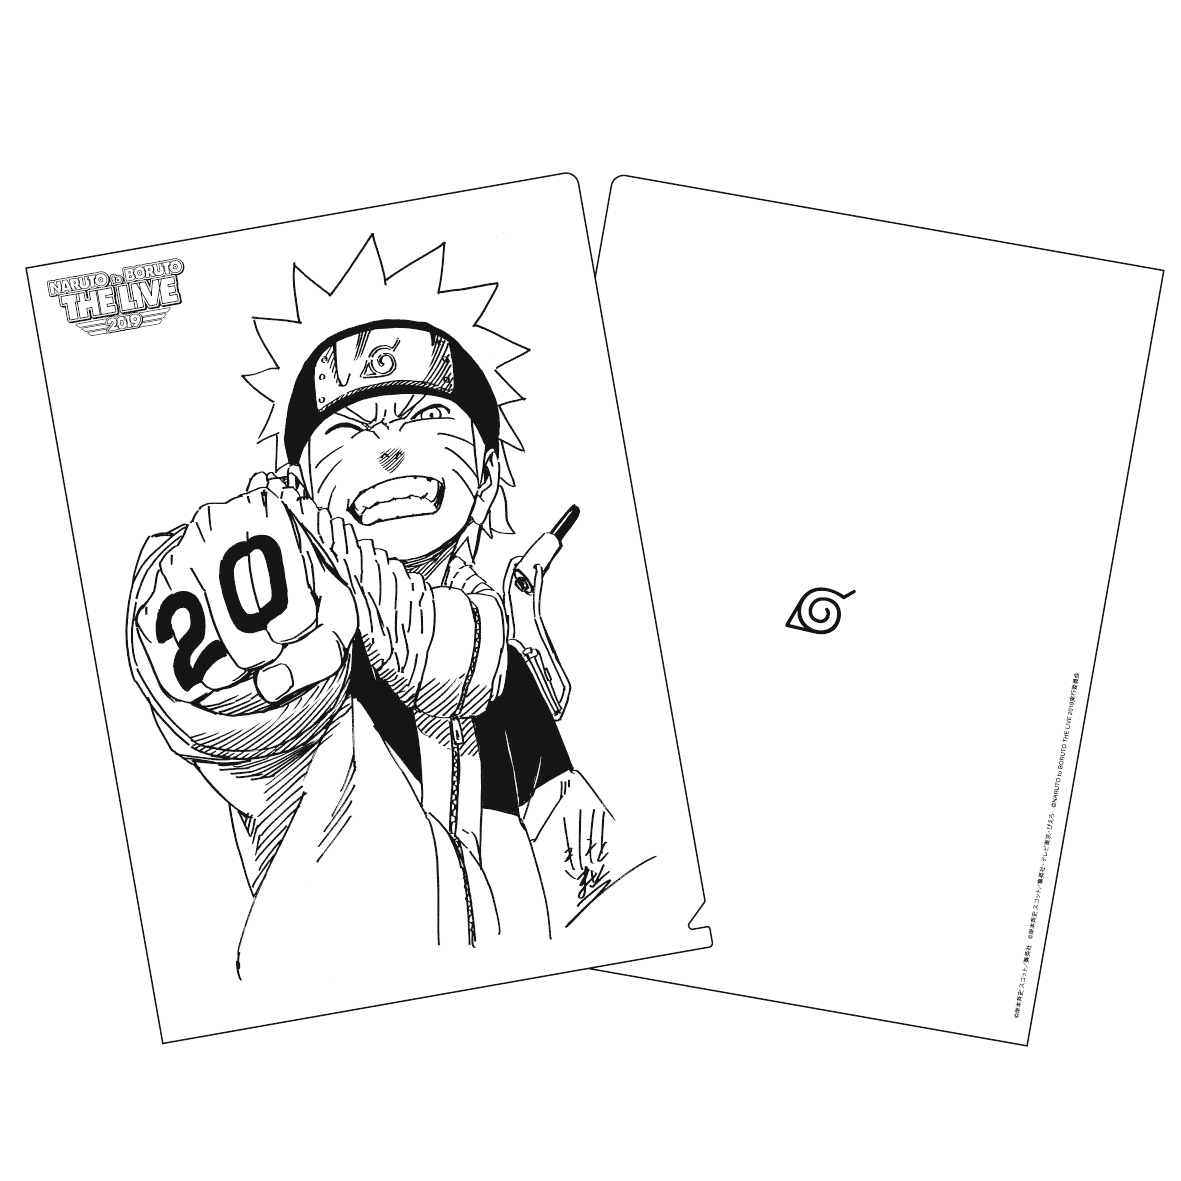 Naruto ナルト 周年記念 岸本斉史描き下ろしイラストグッズを ナルボルライブ19 で販売決定 チケットは完売間近 ガジェット通信 Getnews